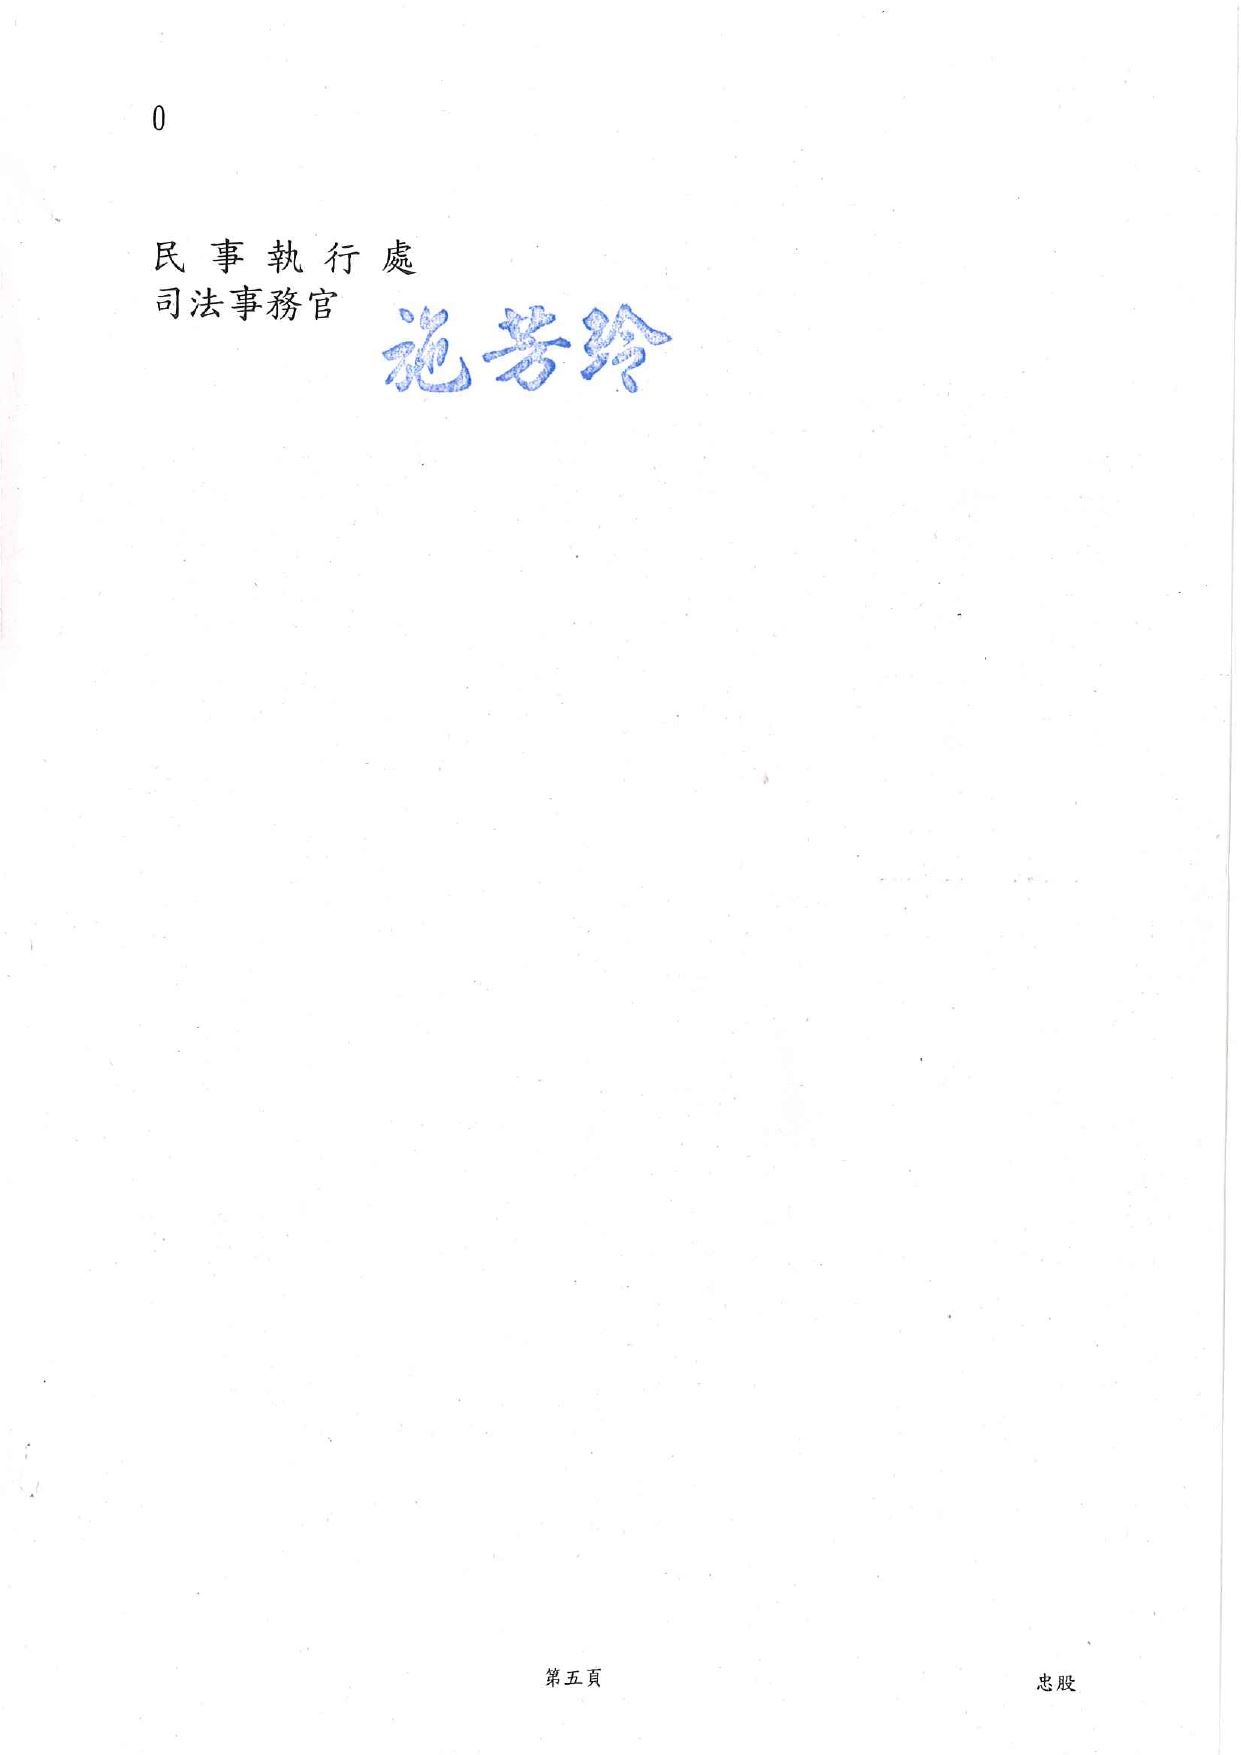 111年10月18日不動產拍賣公告-張志豪_page-0005